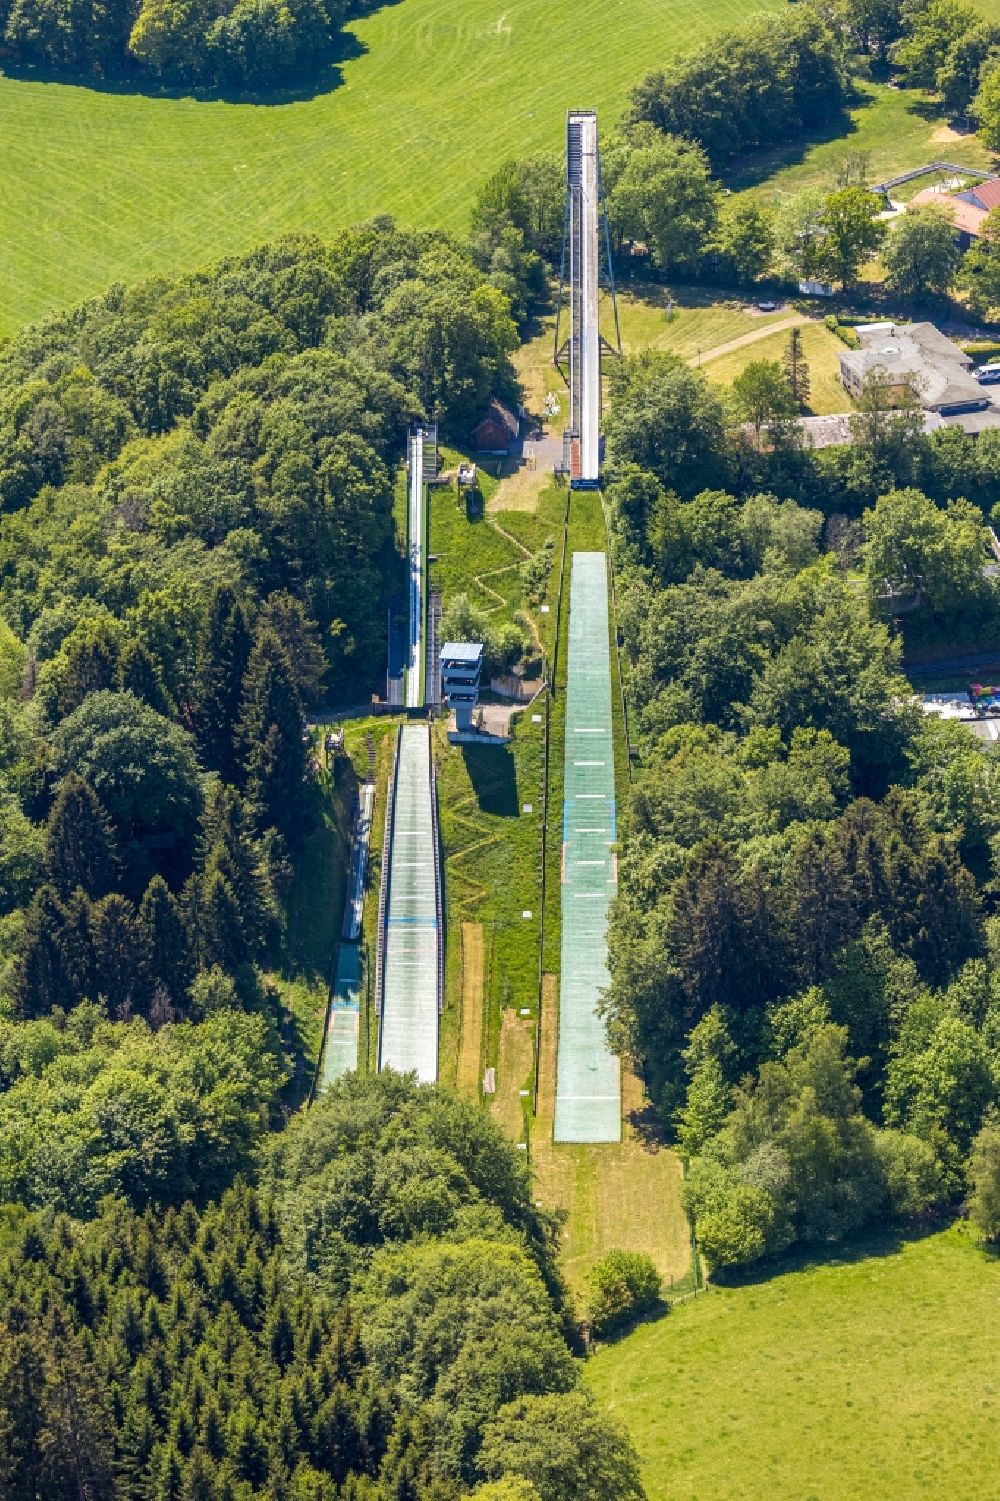 Aerial image Meinerzhagen - Training and competitive sports center of the ski jump in Meinerzhagen in the state North Rhine-Westphalia, Germany